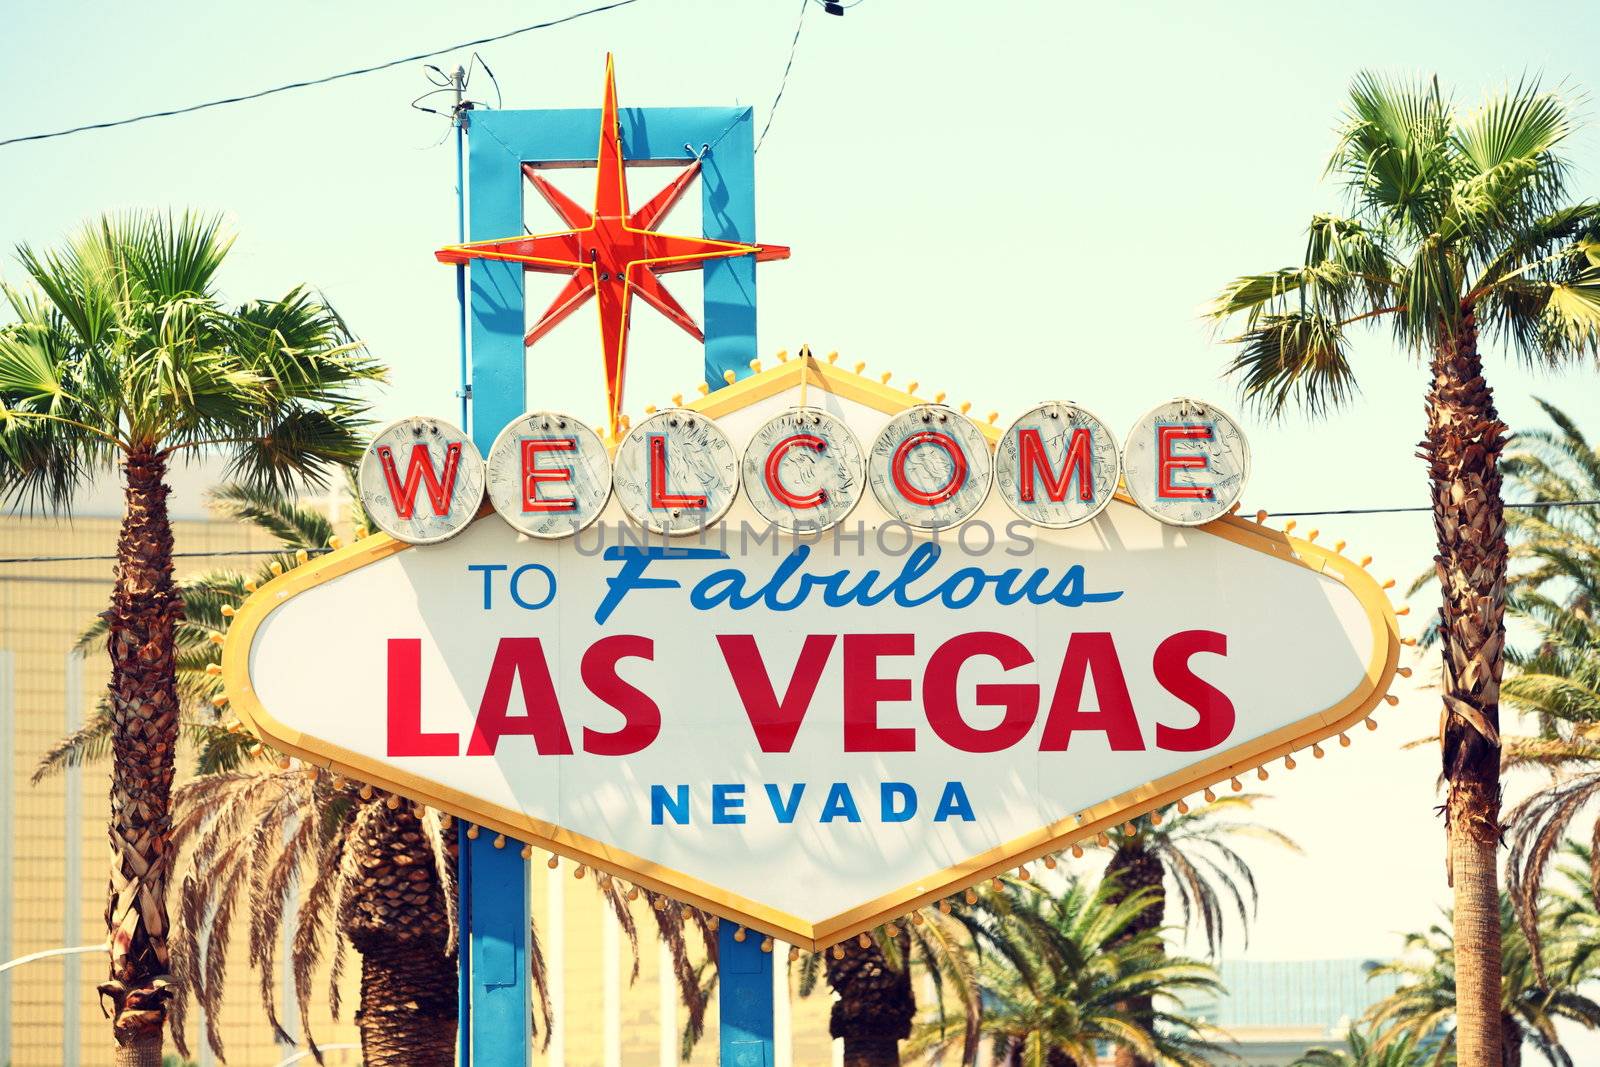 Las Vegas sign. Welcome to Fabulous Las Vegas, Nevada sign. Retro vintage style.